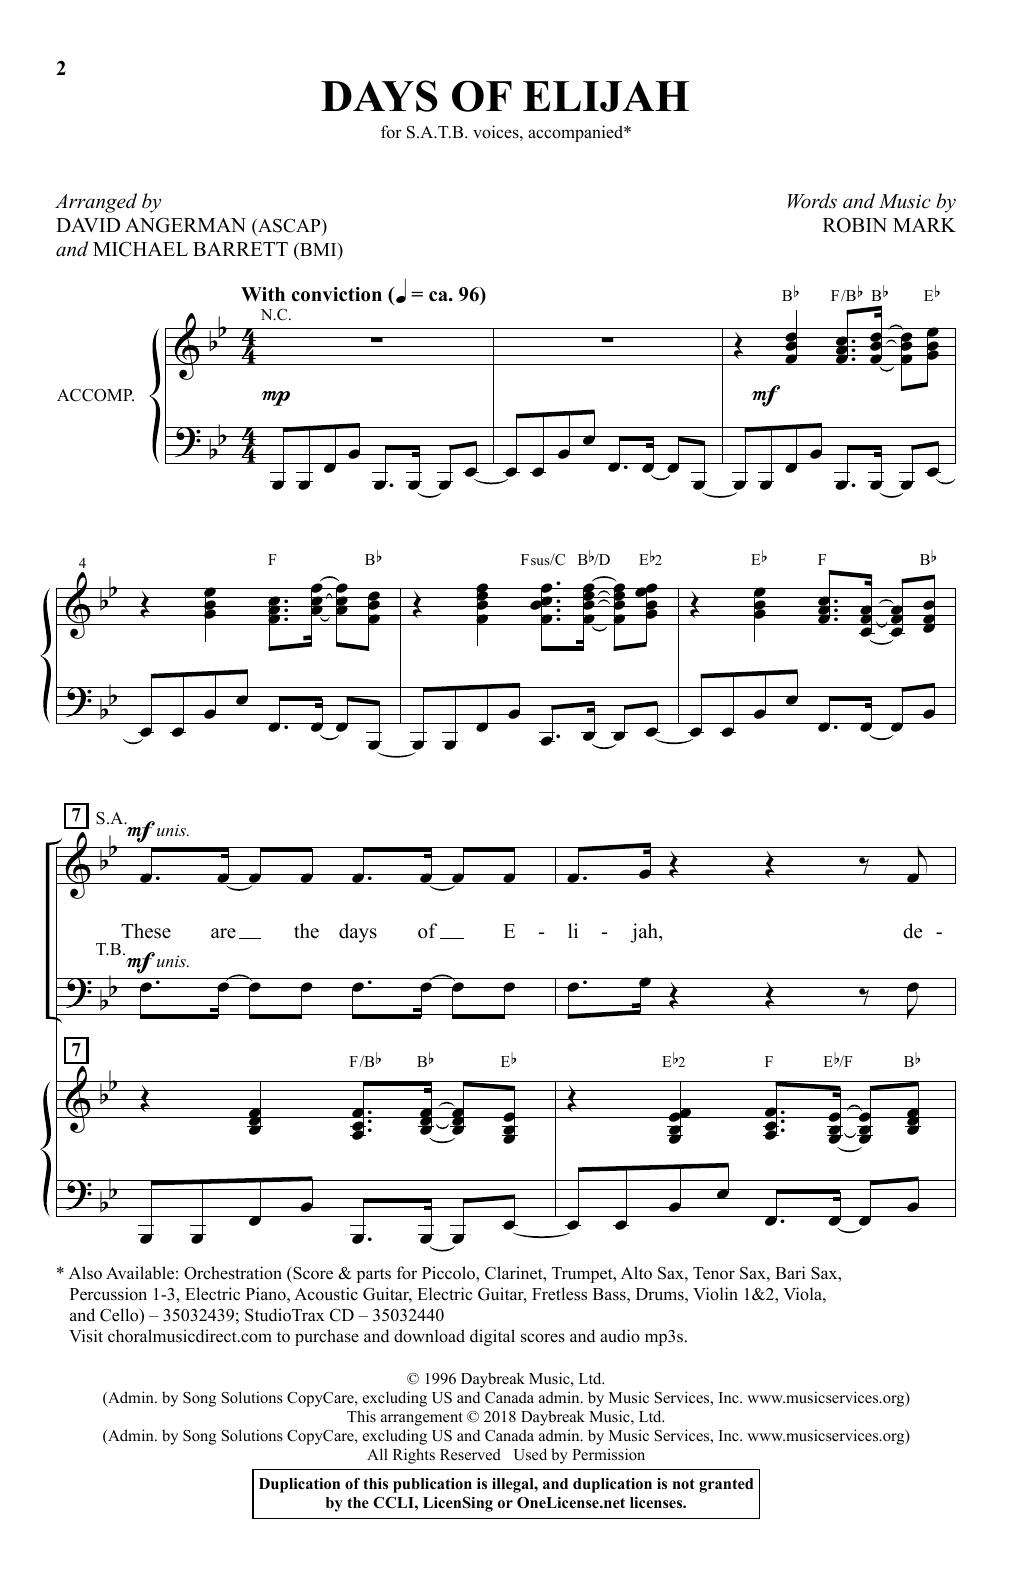 Download Robin Mark Days Of Elijah (arr. David Angerman & Michael Barrett) Sheet Music and learn how to play SATB Choir PDF digital score in minutes